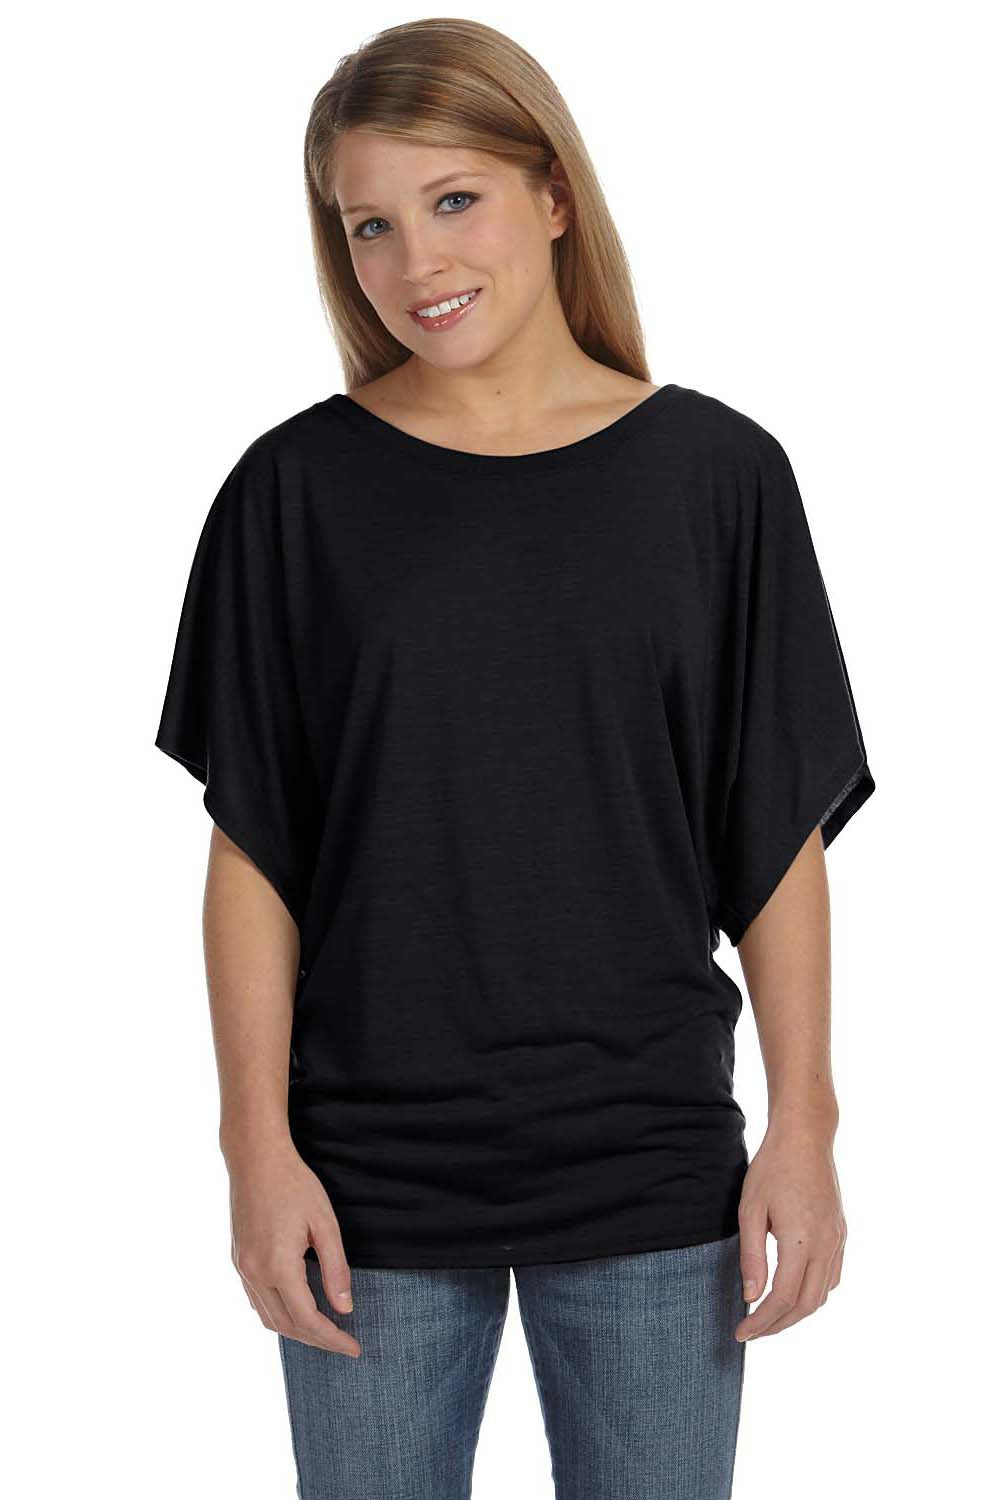 Bella + Canvas Womens Sleeve Short Black Wide Neck — T-Shirt Dolman Flowy Draped 8821